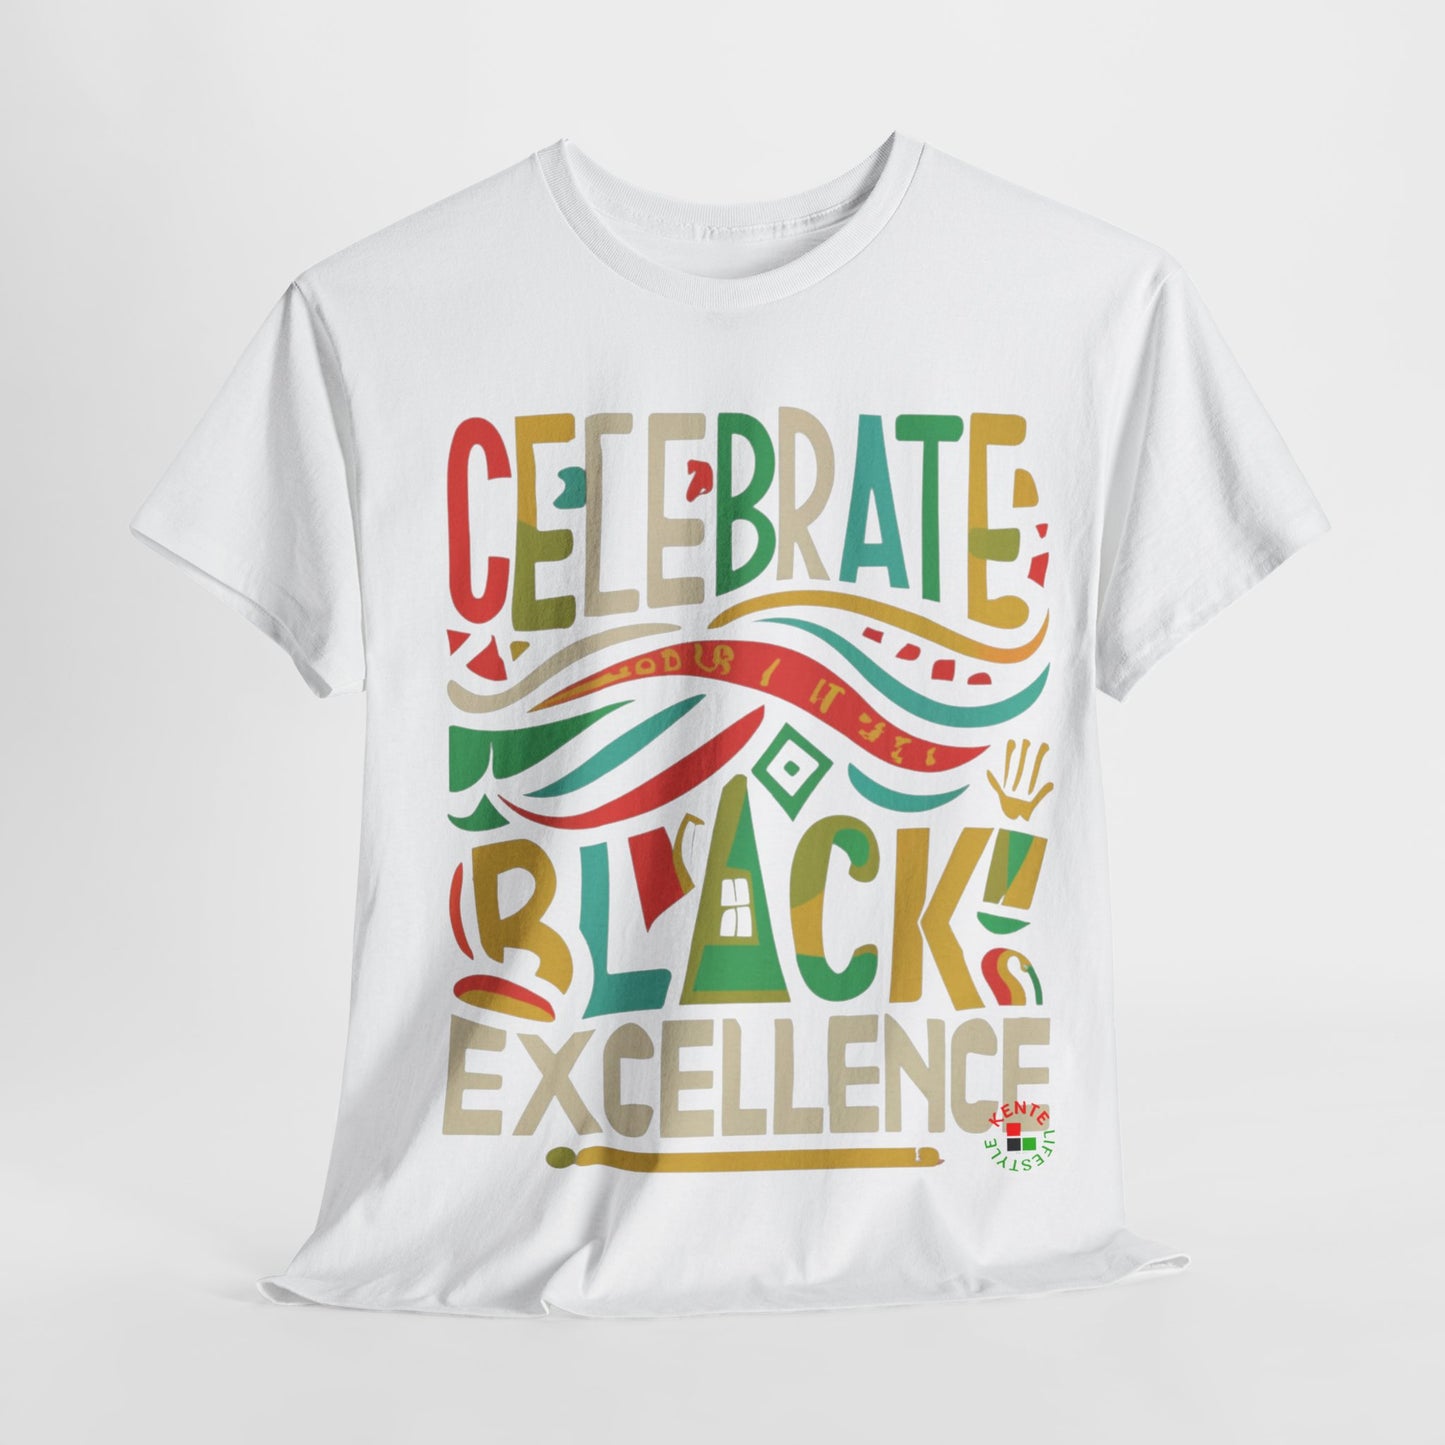 Celebrate Black Excellence - T-shirt